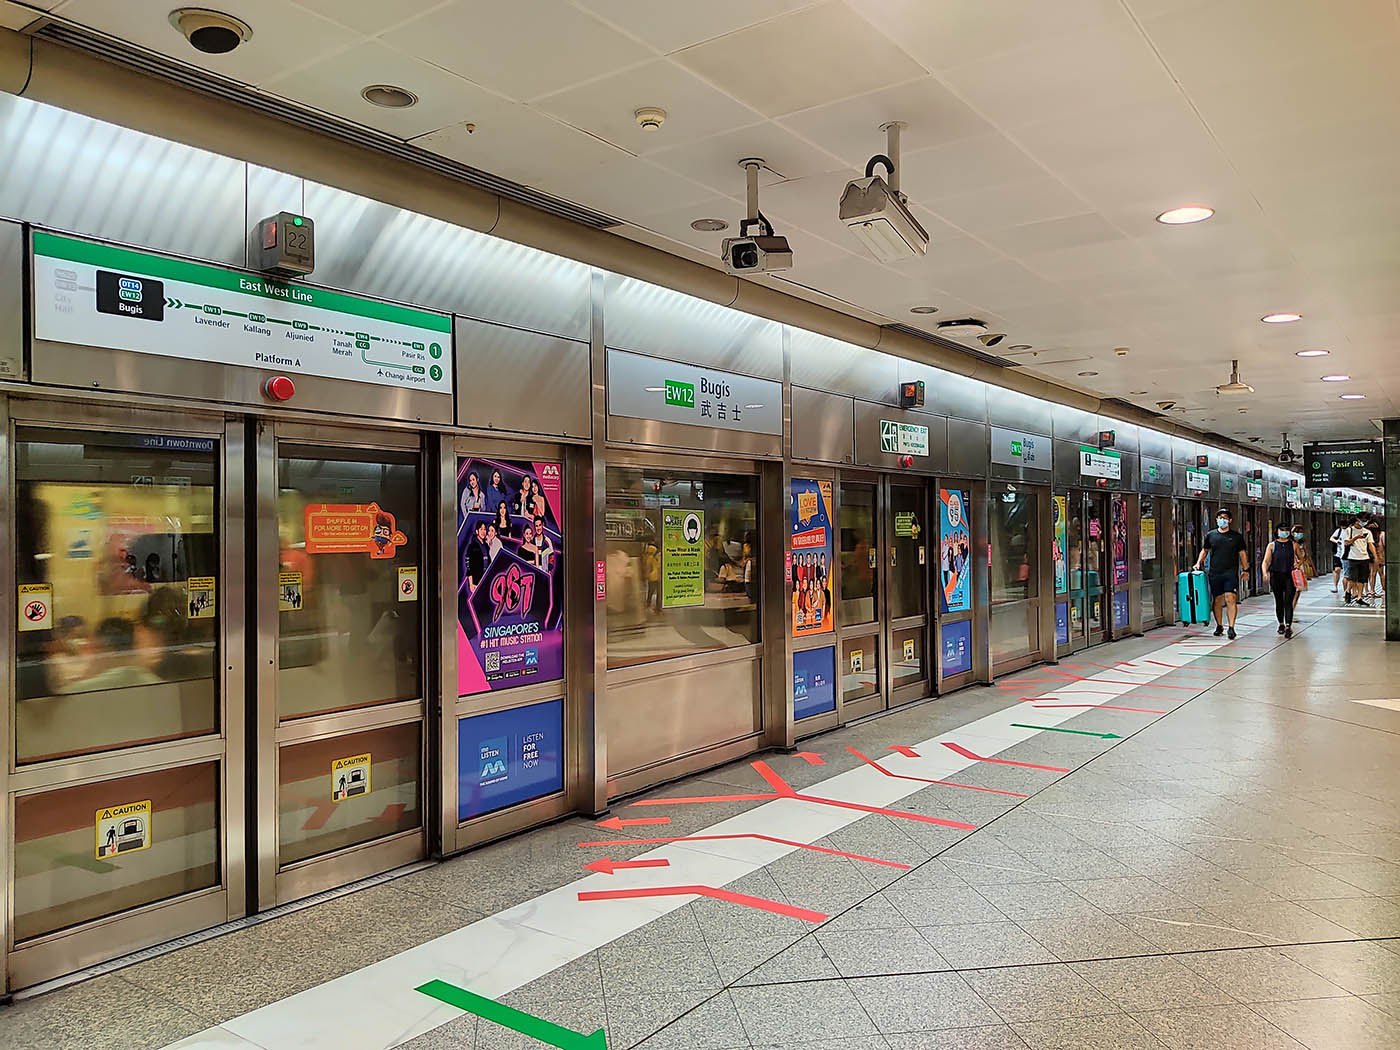 Bugis MRT Station - - EW12 Platform A